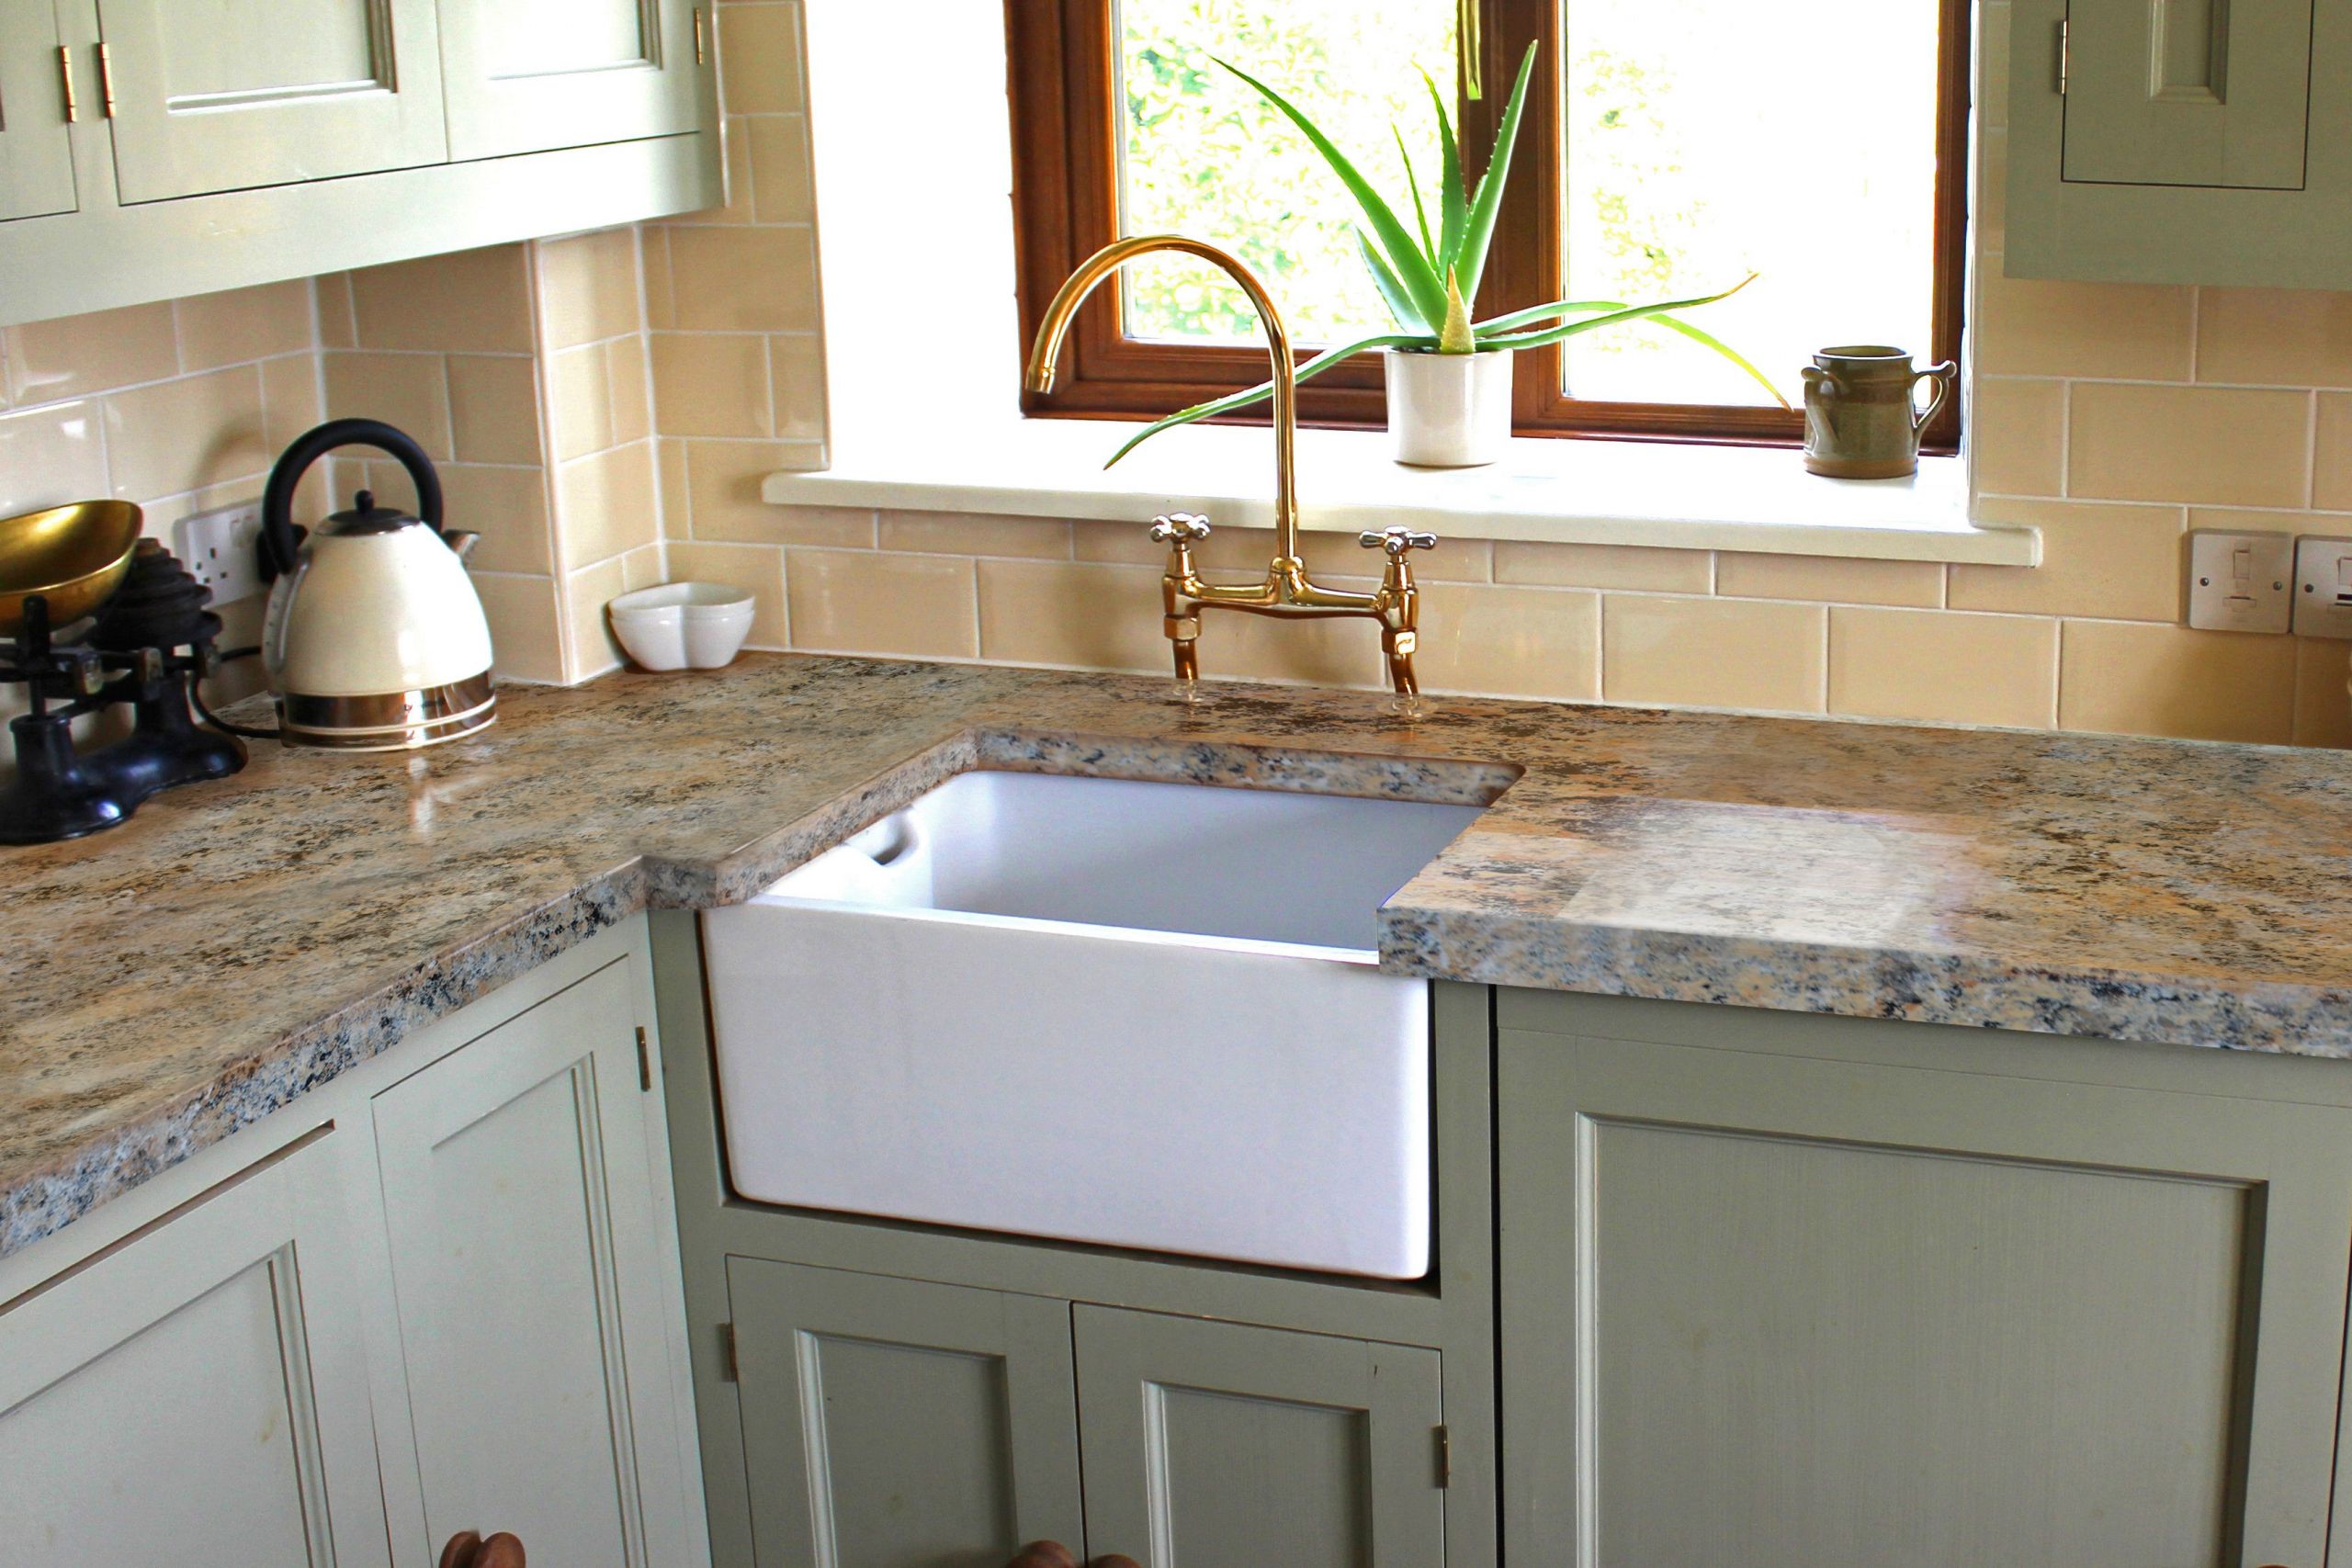 Refinish Kitchen Countertops
 The Five Best DIY Countertop Resurfacing Kits